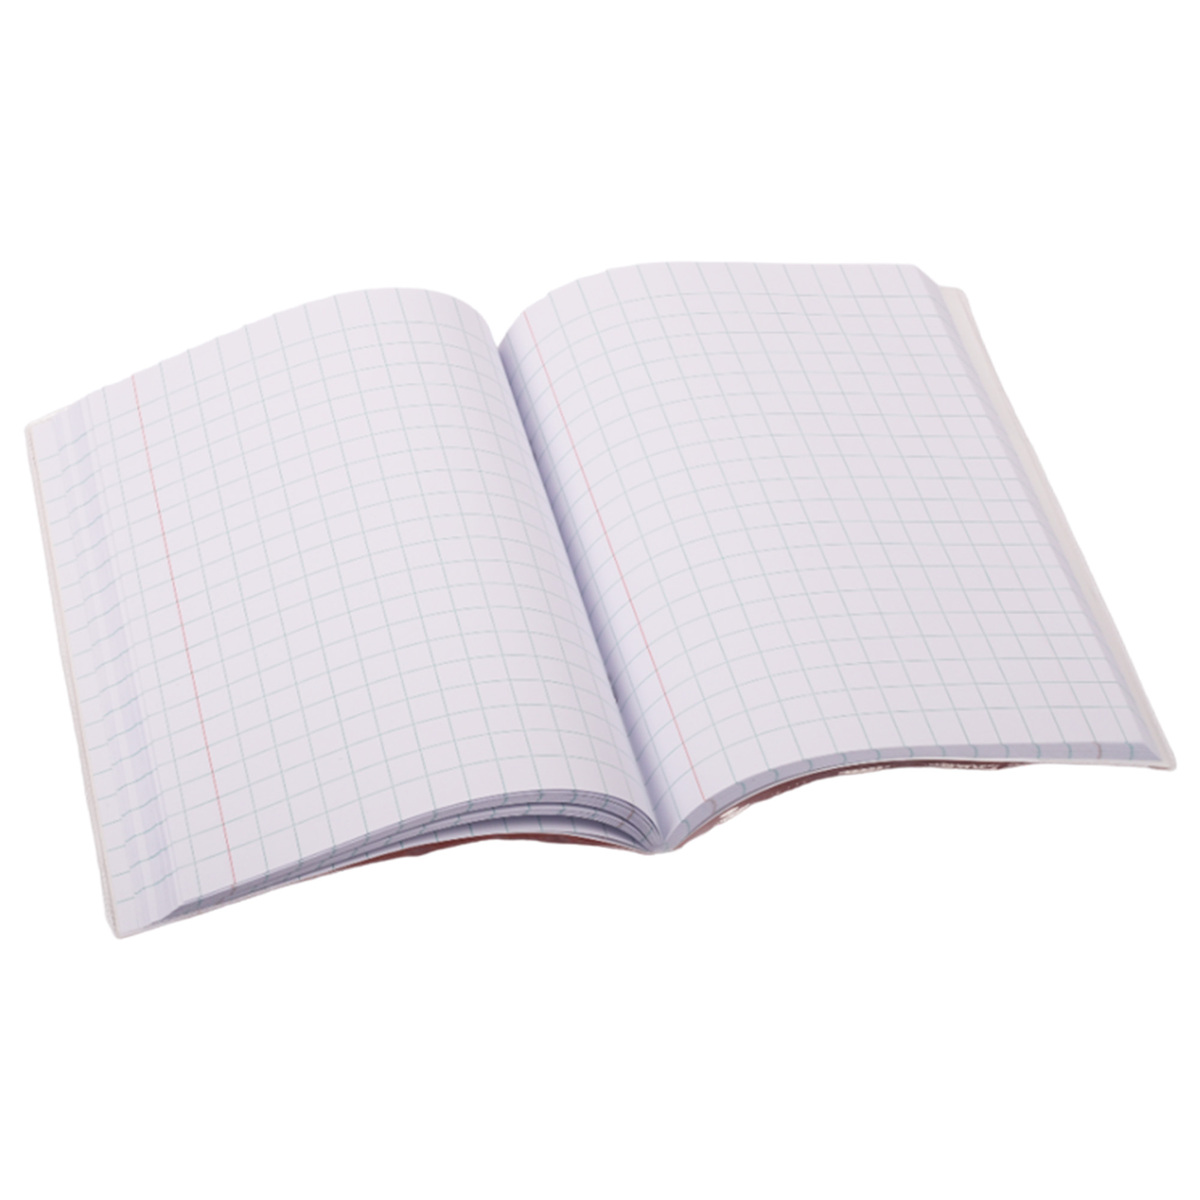 Sadaf Notebook Brown Cover Square 100 Sheets